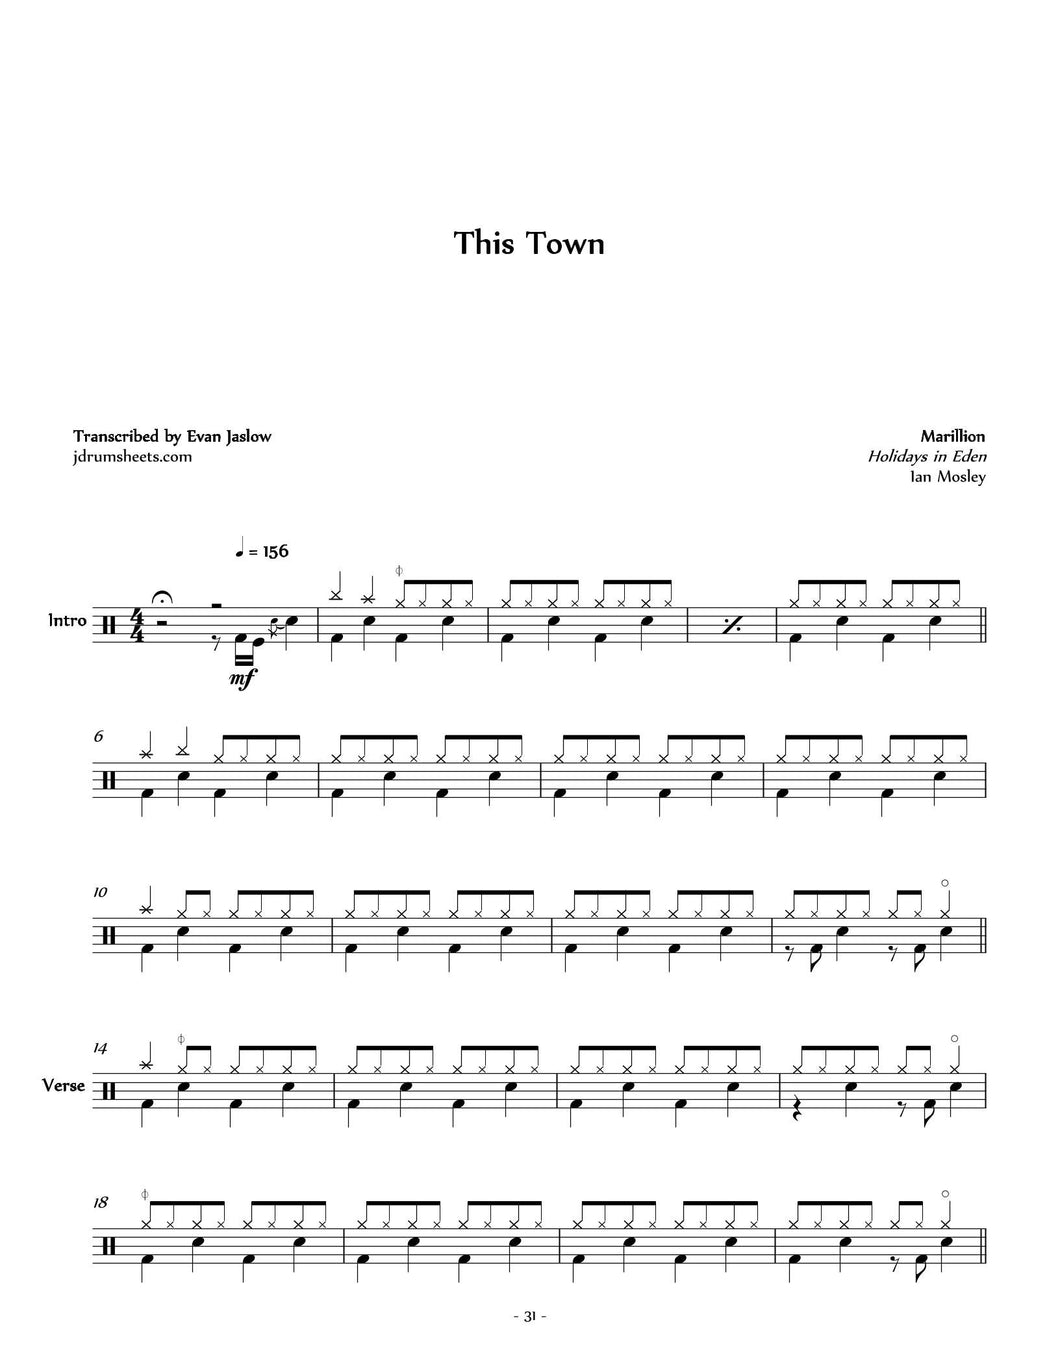 This Town - Marillion - Full Drum Transcription / Drum Sheet Music - Jaslow Drum Sheets